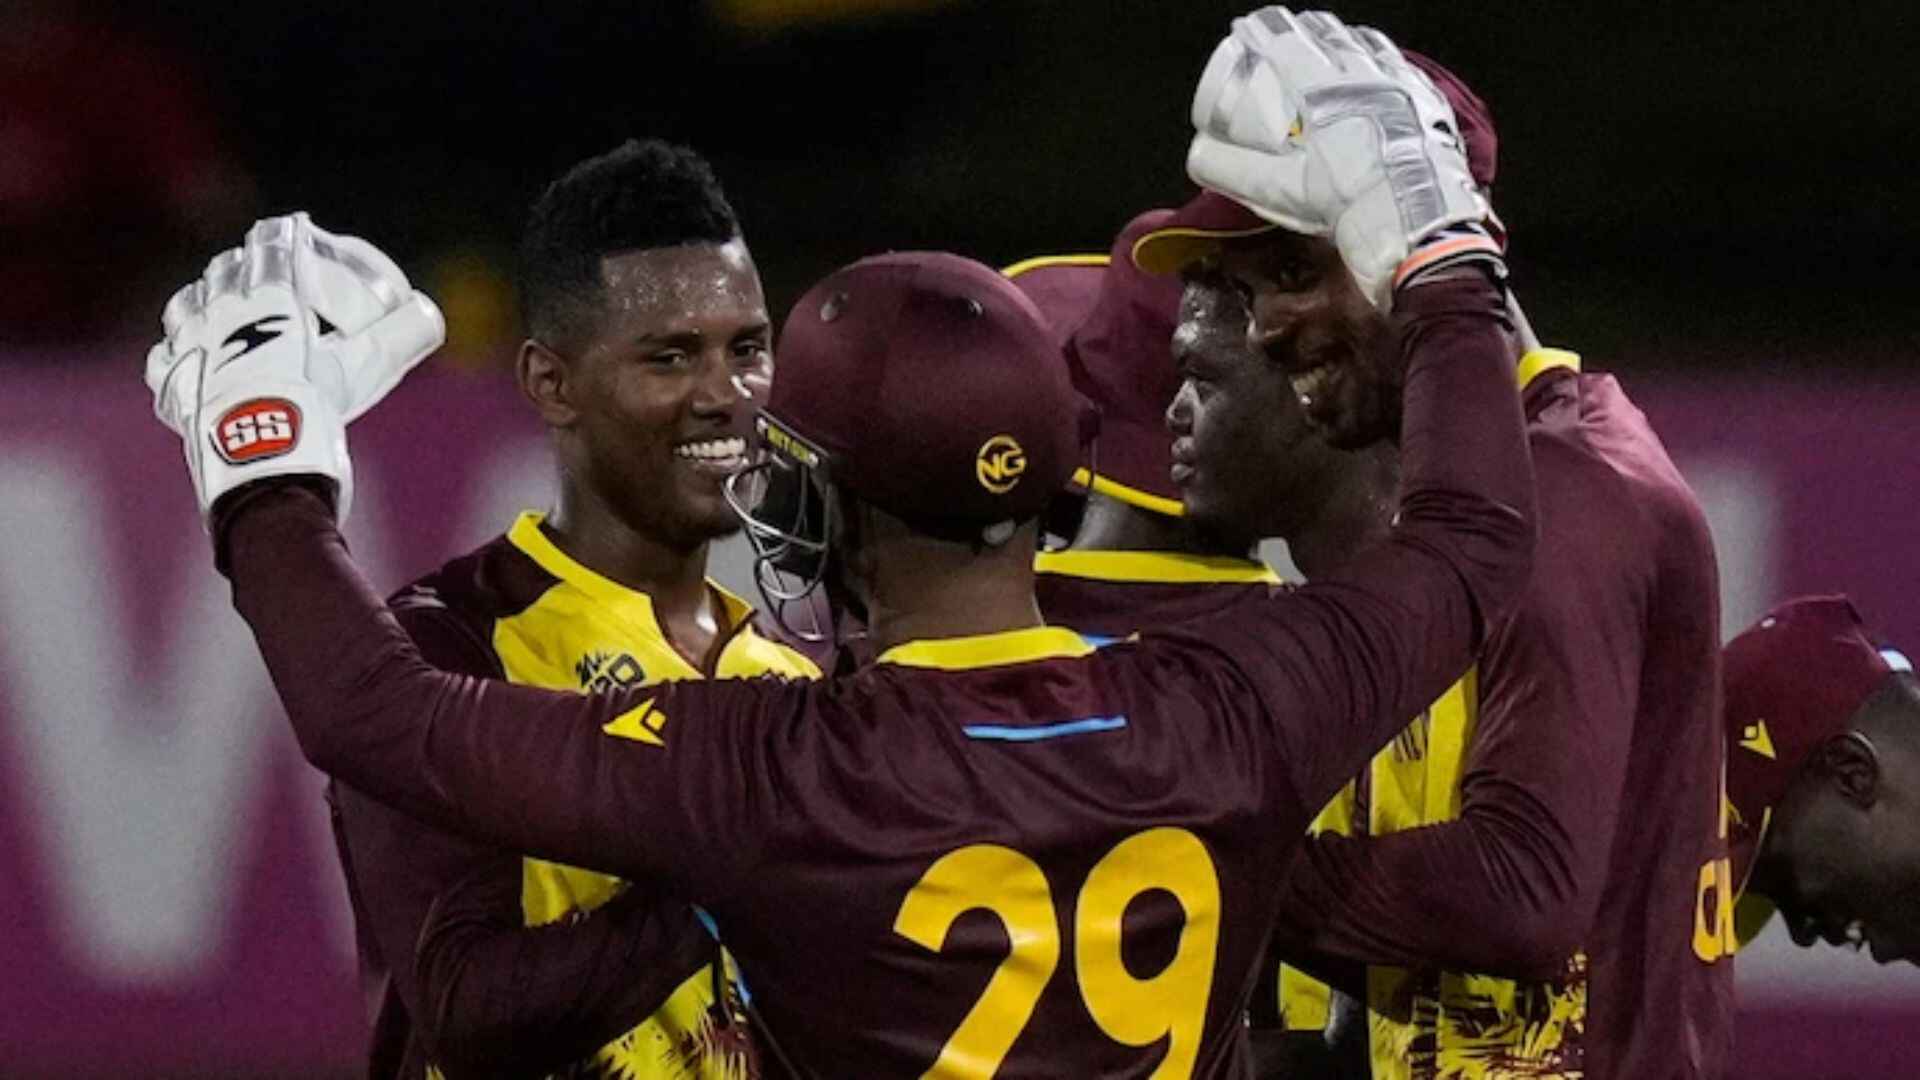 T20 World Cup Update: West Indies Defeat New Zealand, Enter Super 8